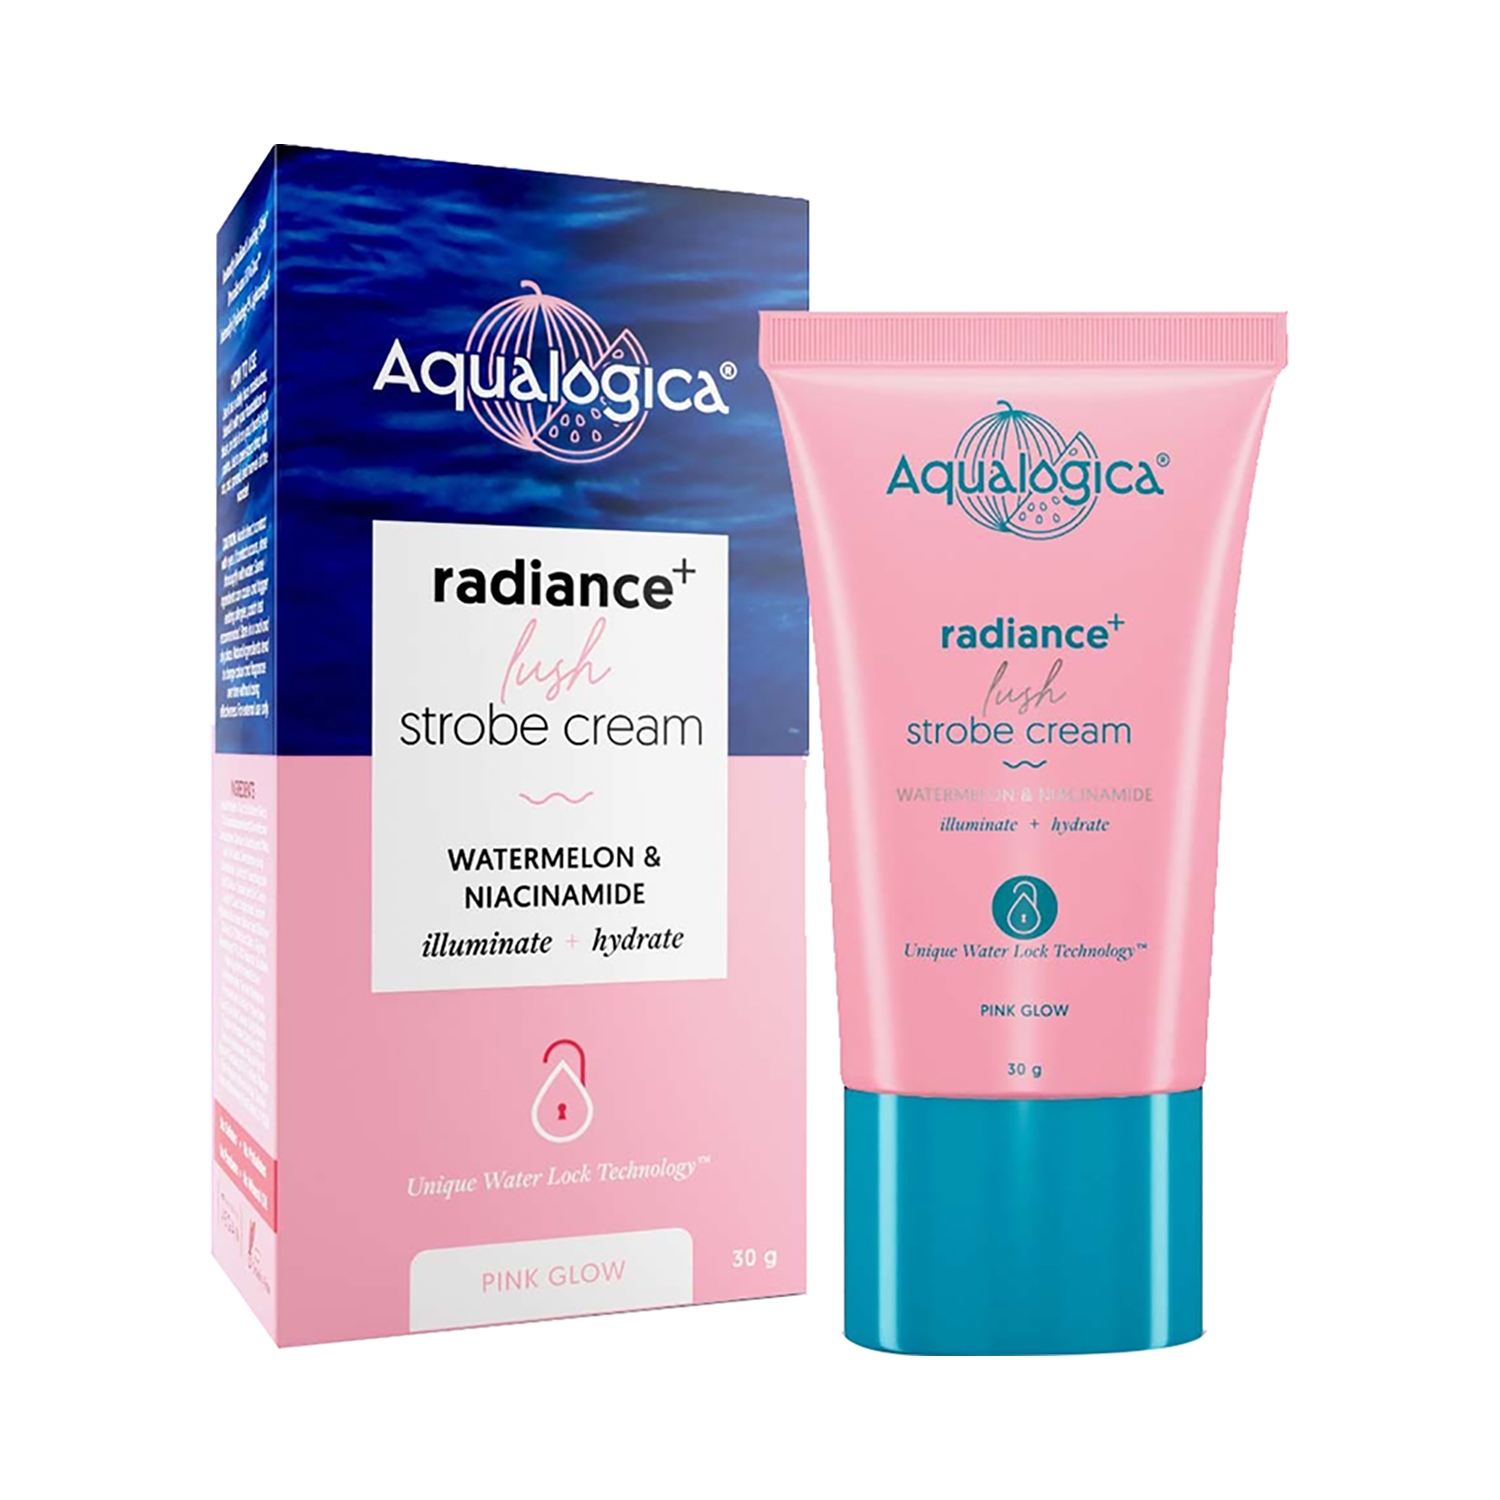 Aqualogica | Aqualogica Radiance+ Lush Strobe Cream with Watermelon & Niacinamide (30g)